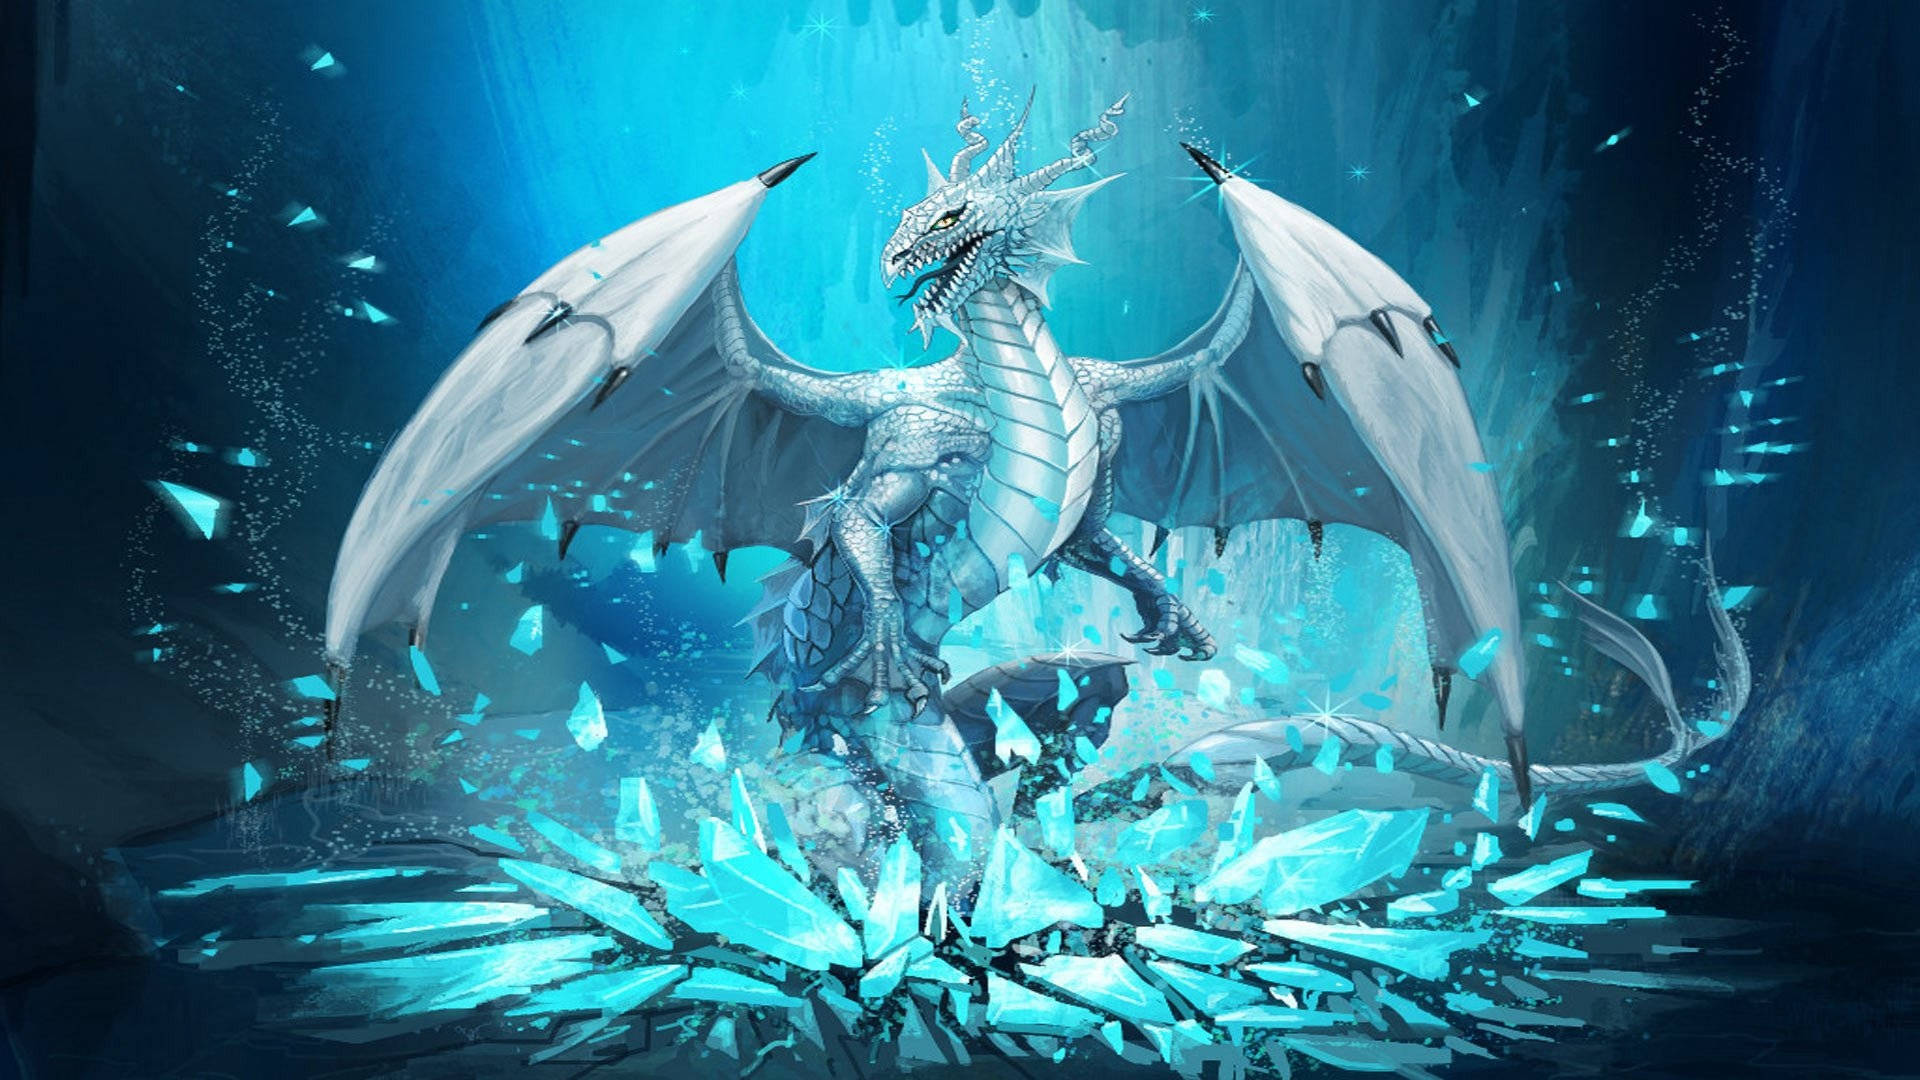 Free Coolest Dragon Wallpaper Downloads, [100+] Coolest Dragon Wallpapers  for FREE 